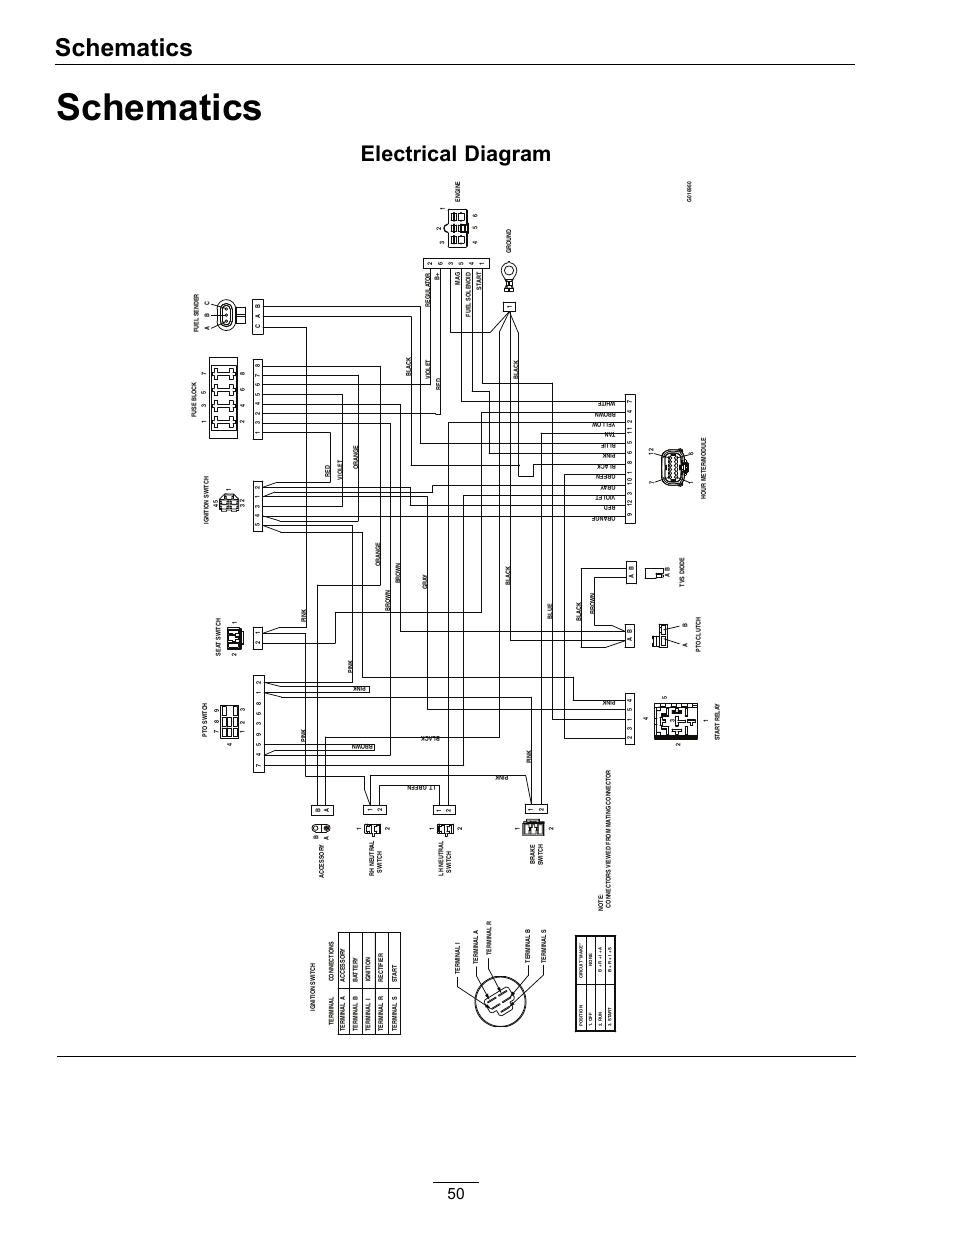 36v wiring diagram trolling motor